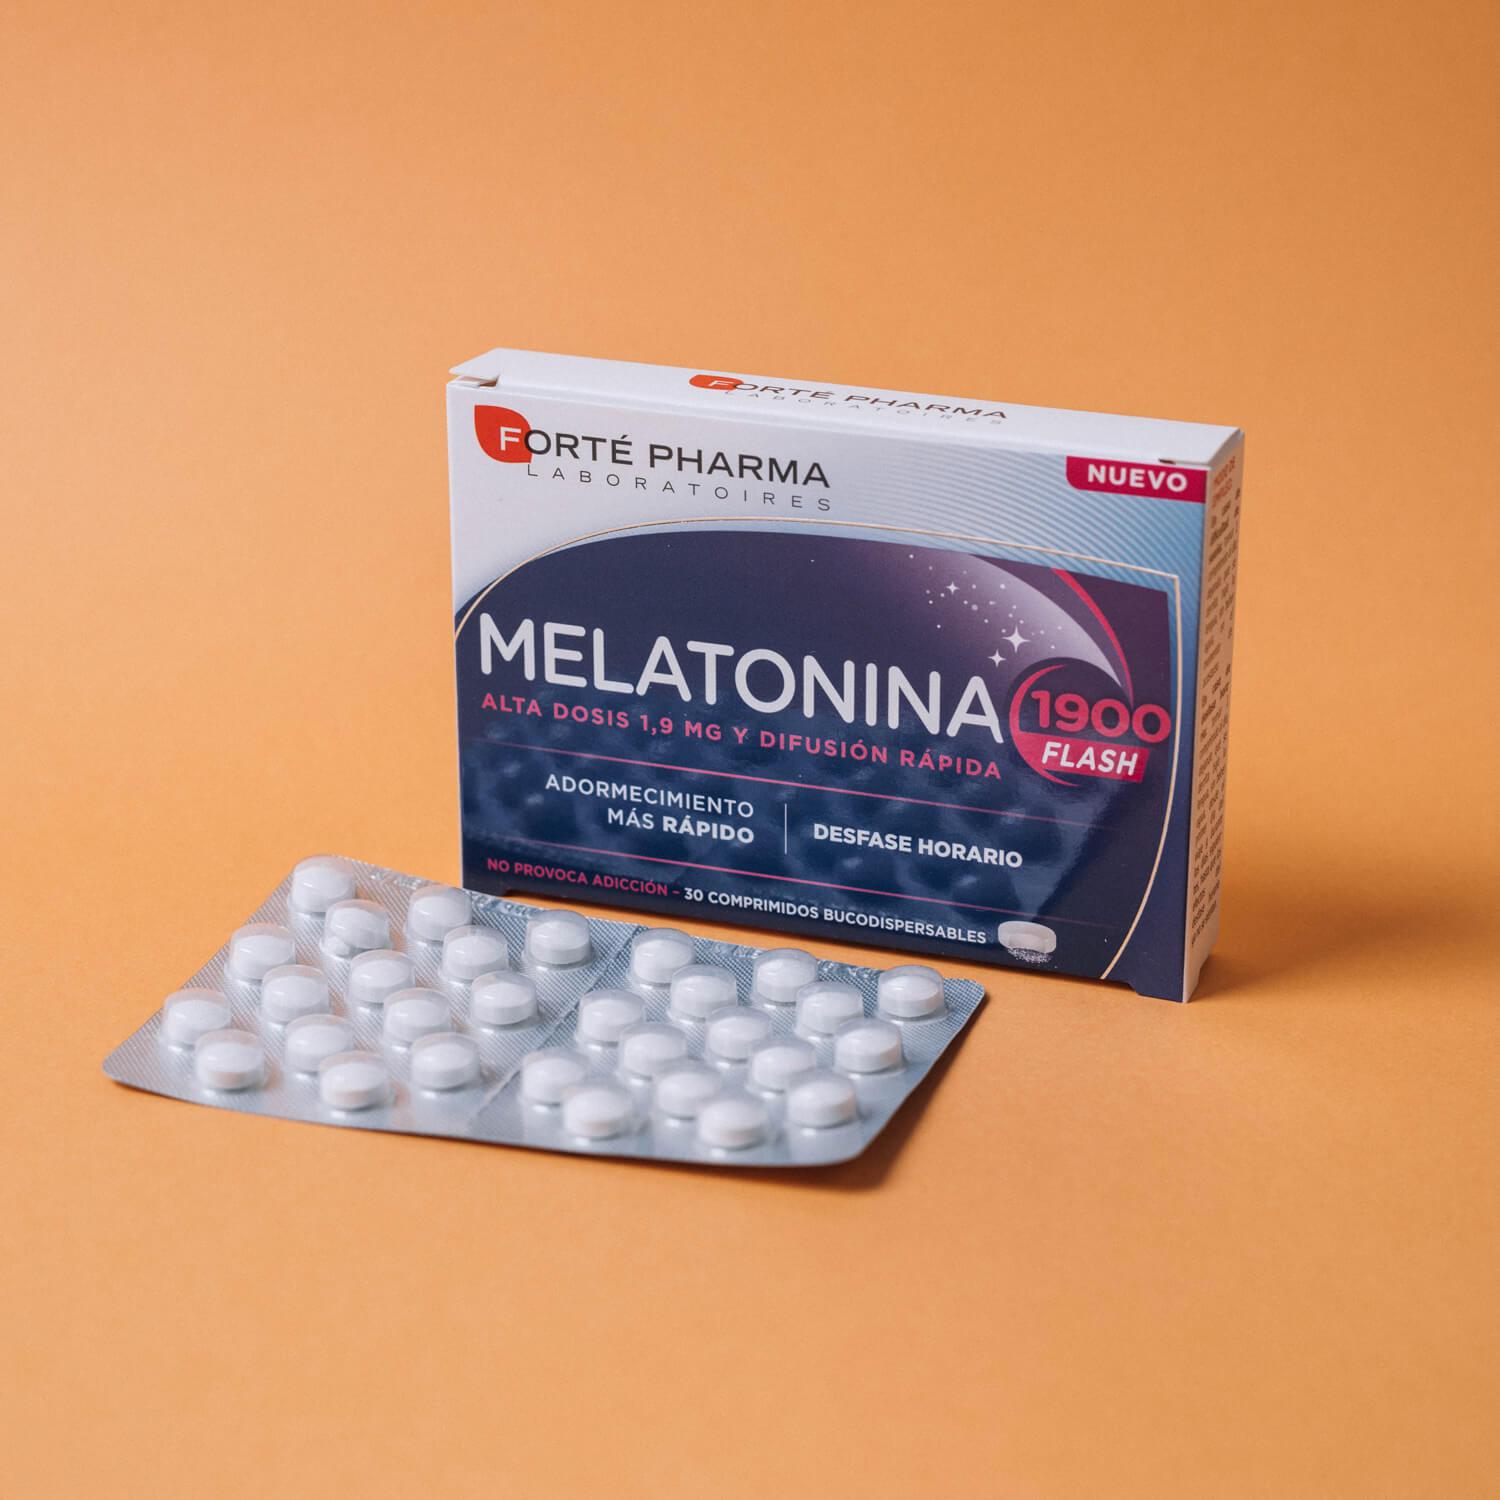 melatonina 1900 flash-Sueño-Naturalidad-Forté Pharma